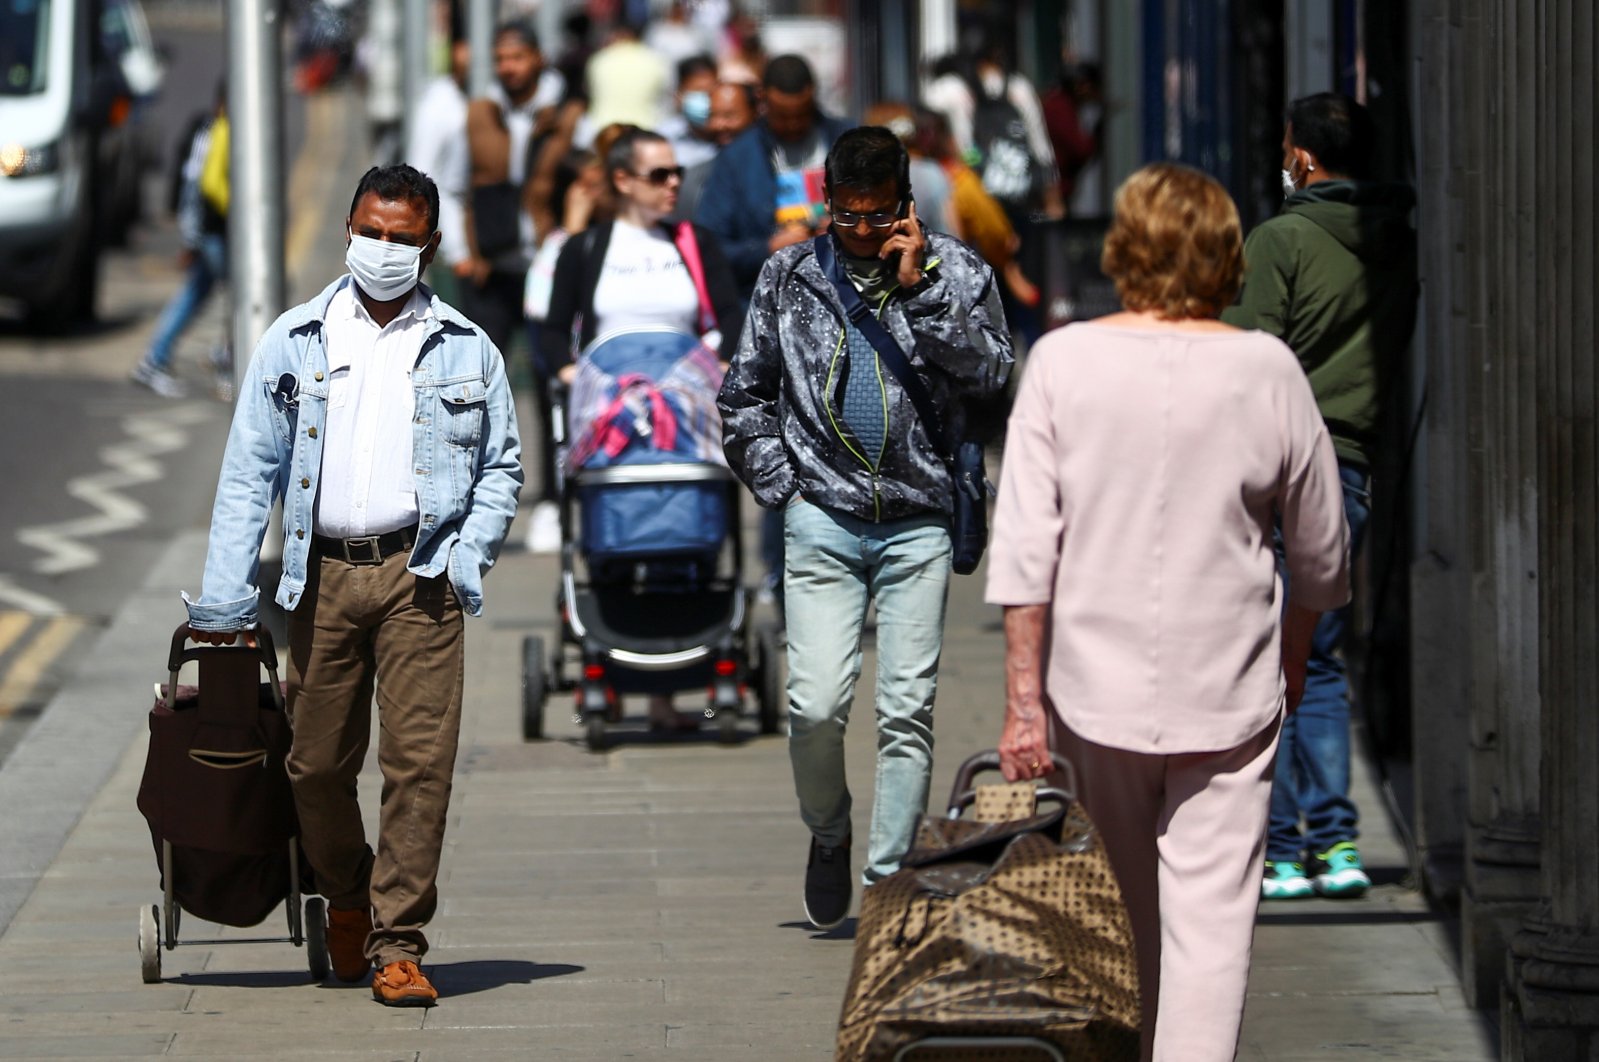 People walk down a street following the coronavirus outbreak, London, Britain, July 29, 2020. (Reuters Photo)